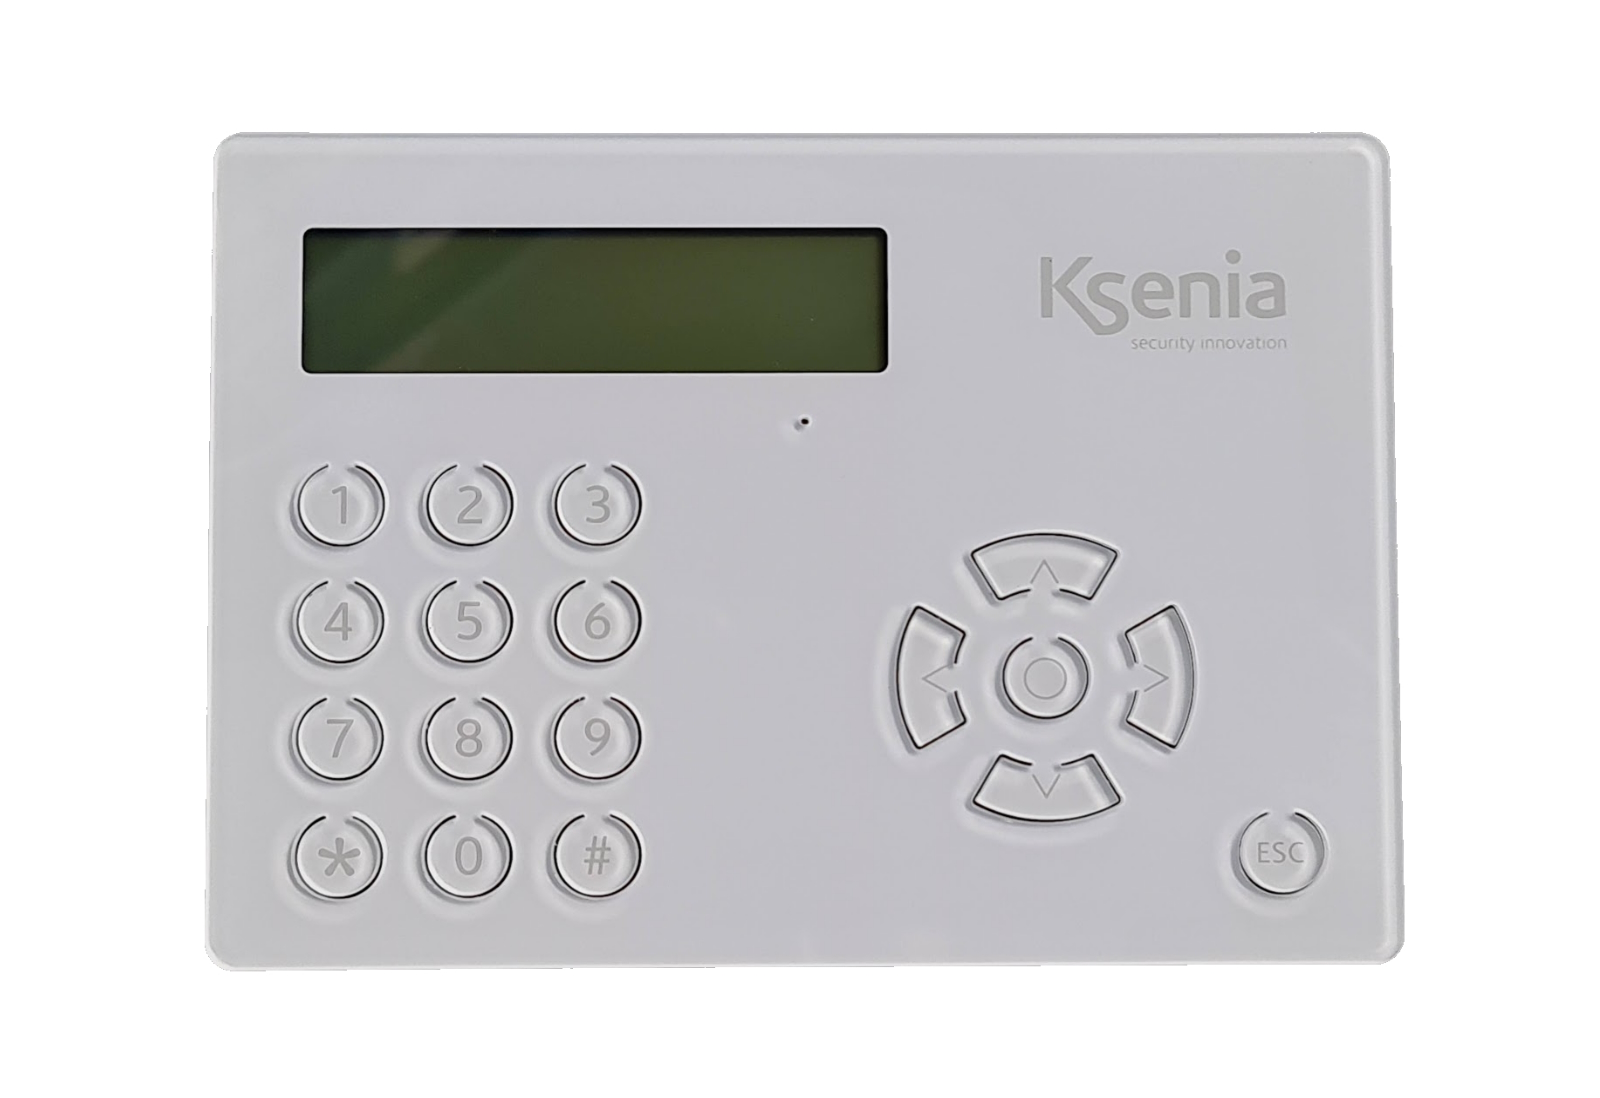 10020026 Clavier LCD avec RFID pour Ksenia, blanc